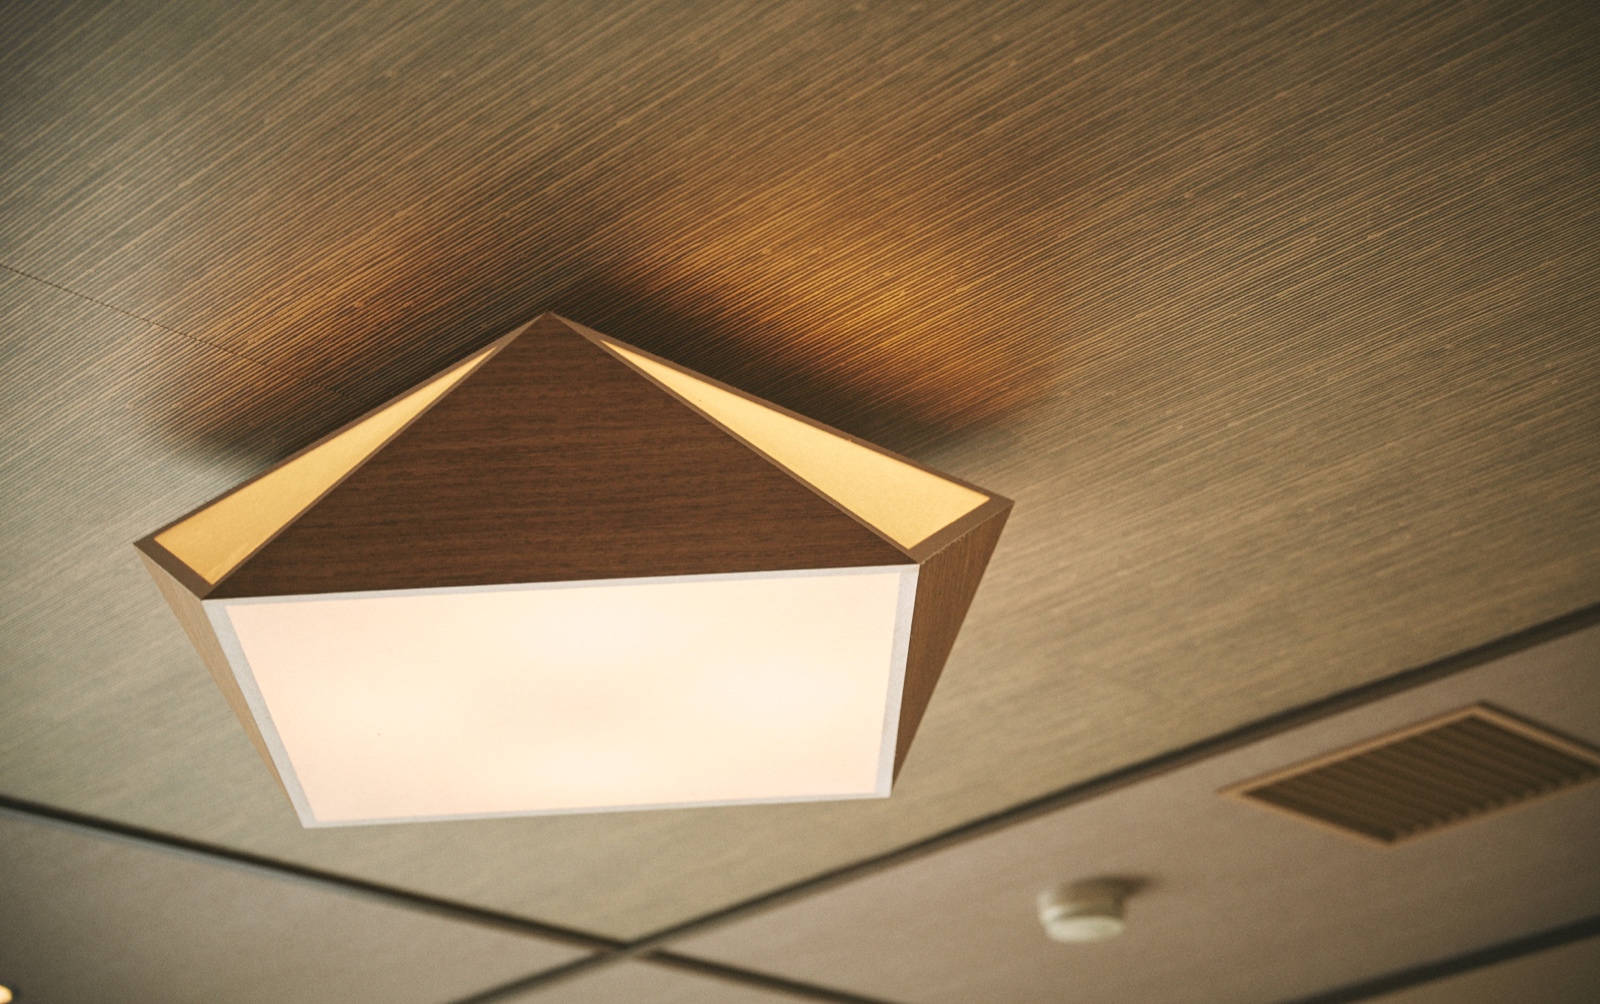 A Design-conscious light in a room